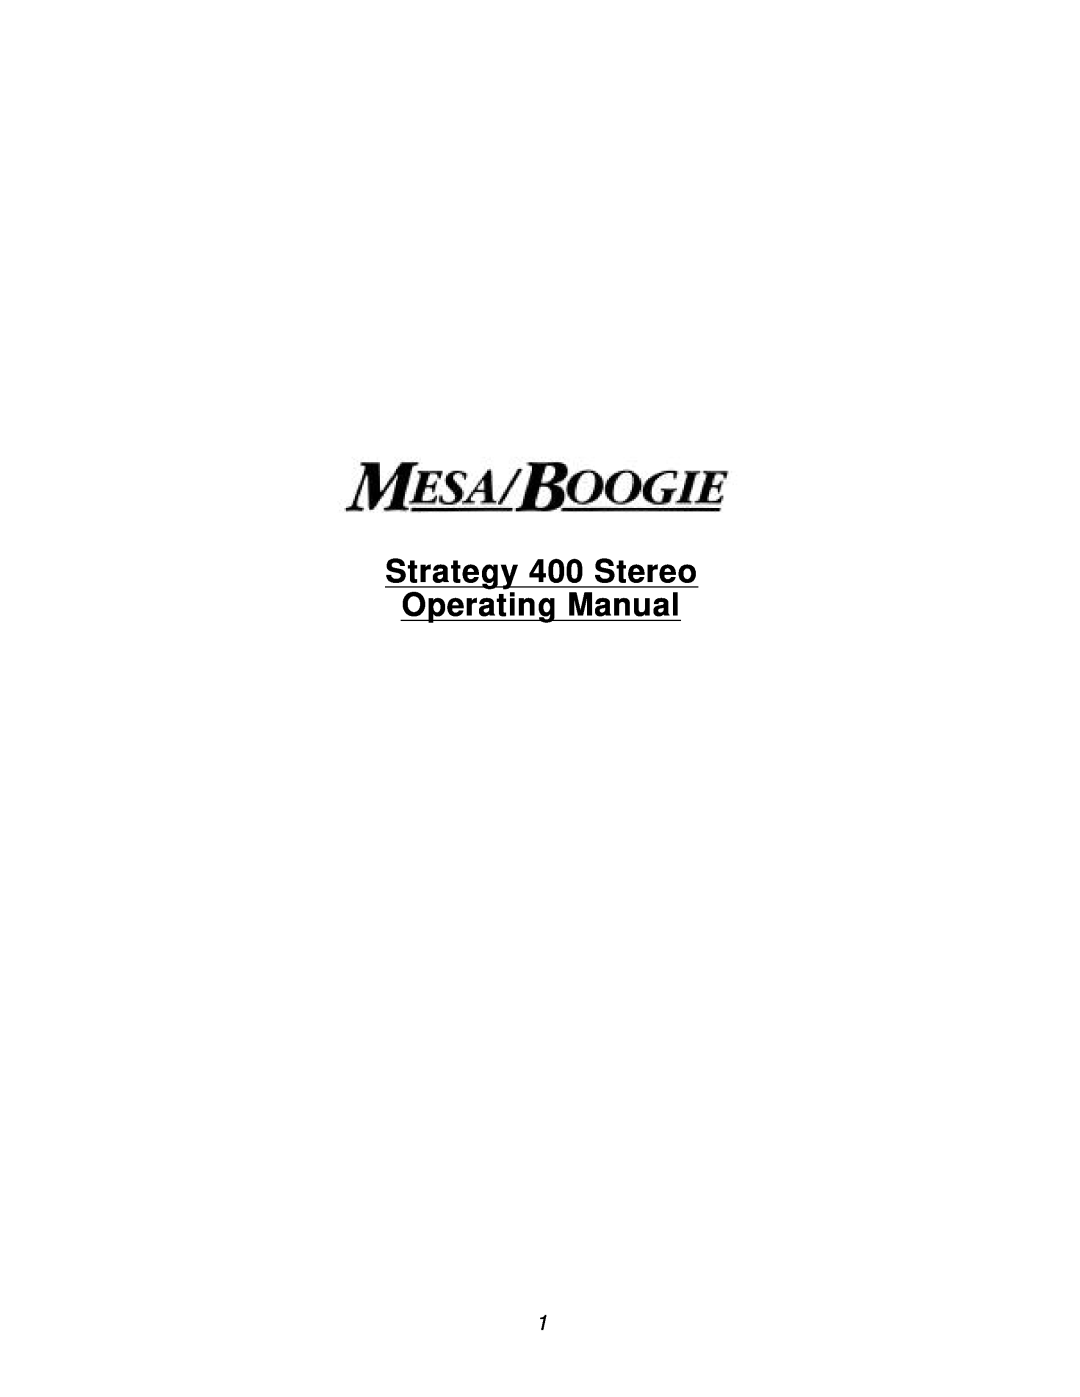 Mesa/Boogie manual Strategy 400 Stereo Operating Manual 